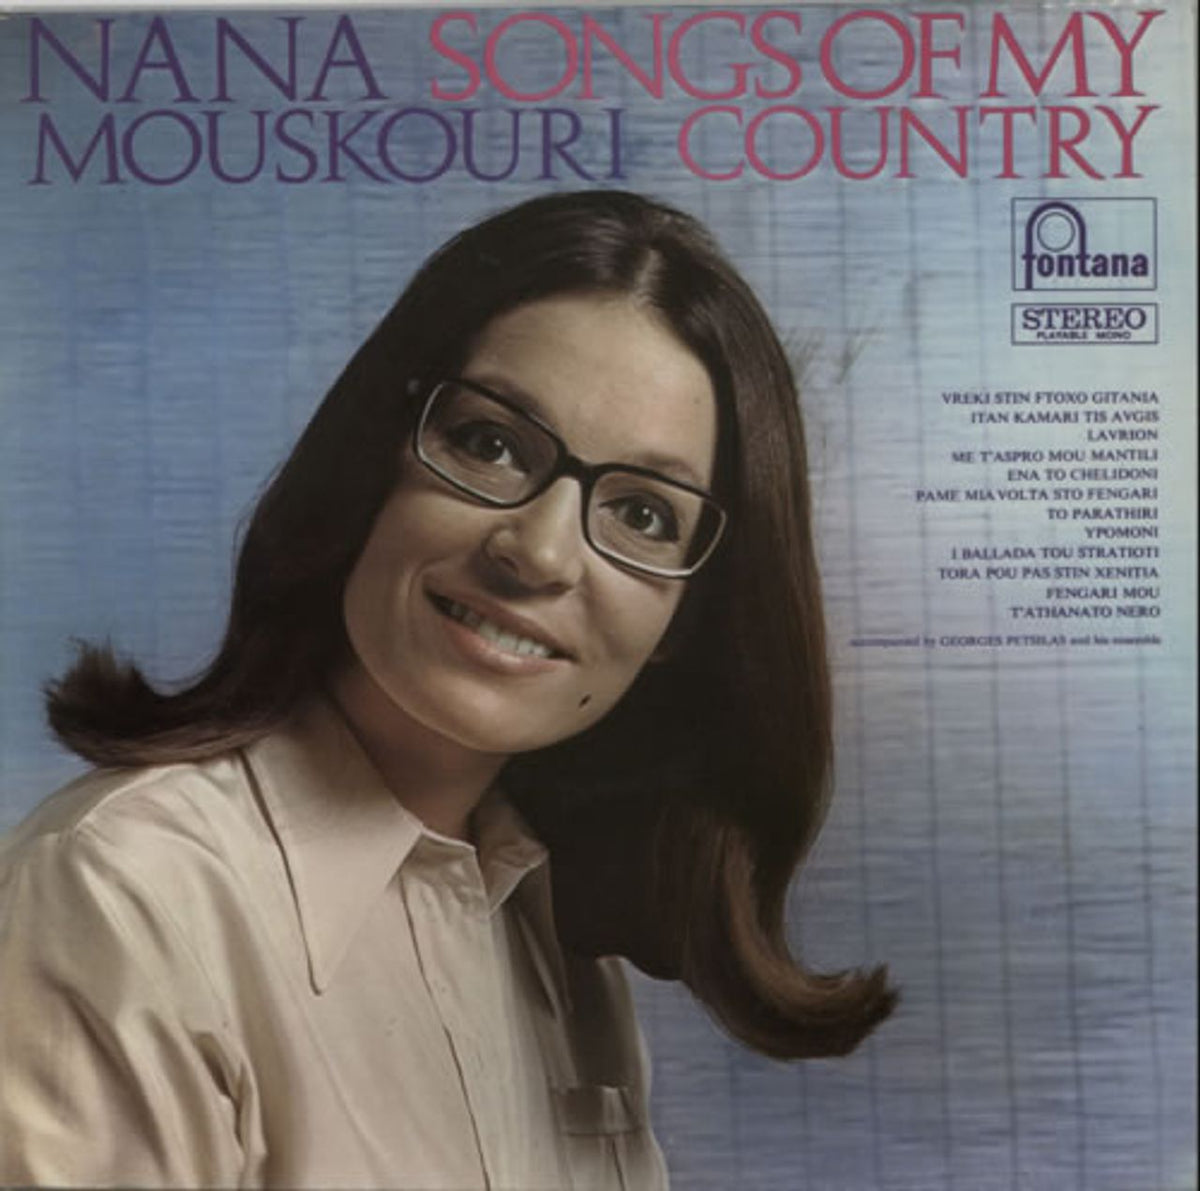 Nana Mouskouri Songs Of My Country UK Vinyl LP — RareVinyl.com